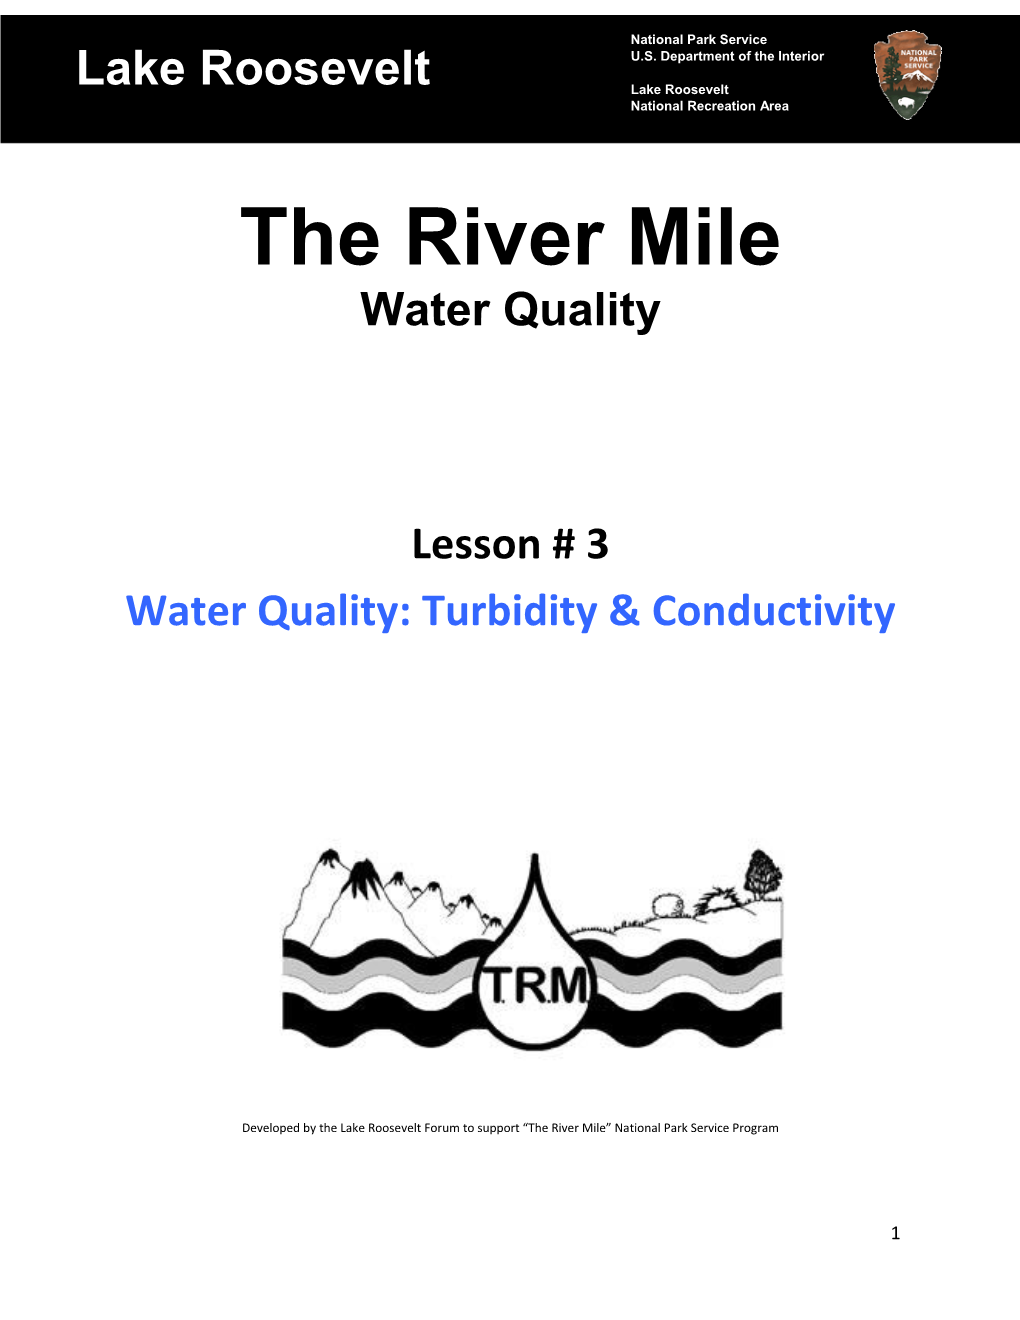 Water Quality Turbidity & Conductivity